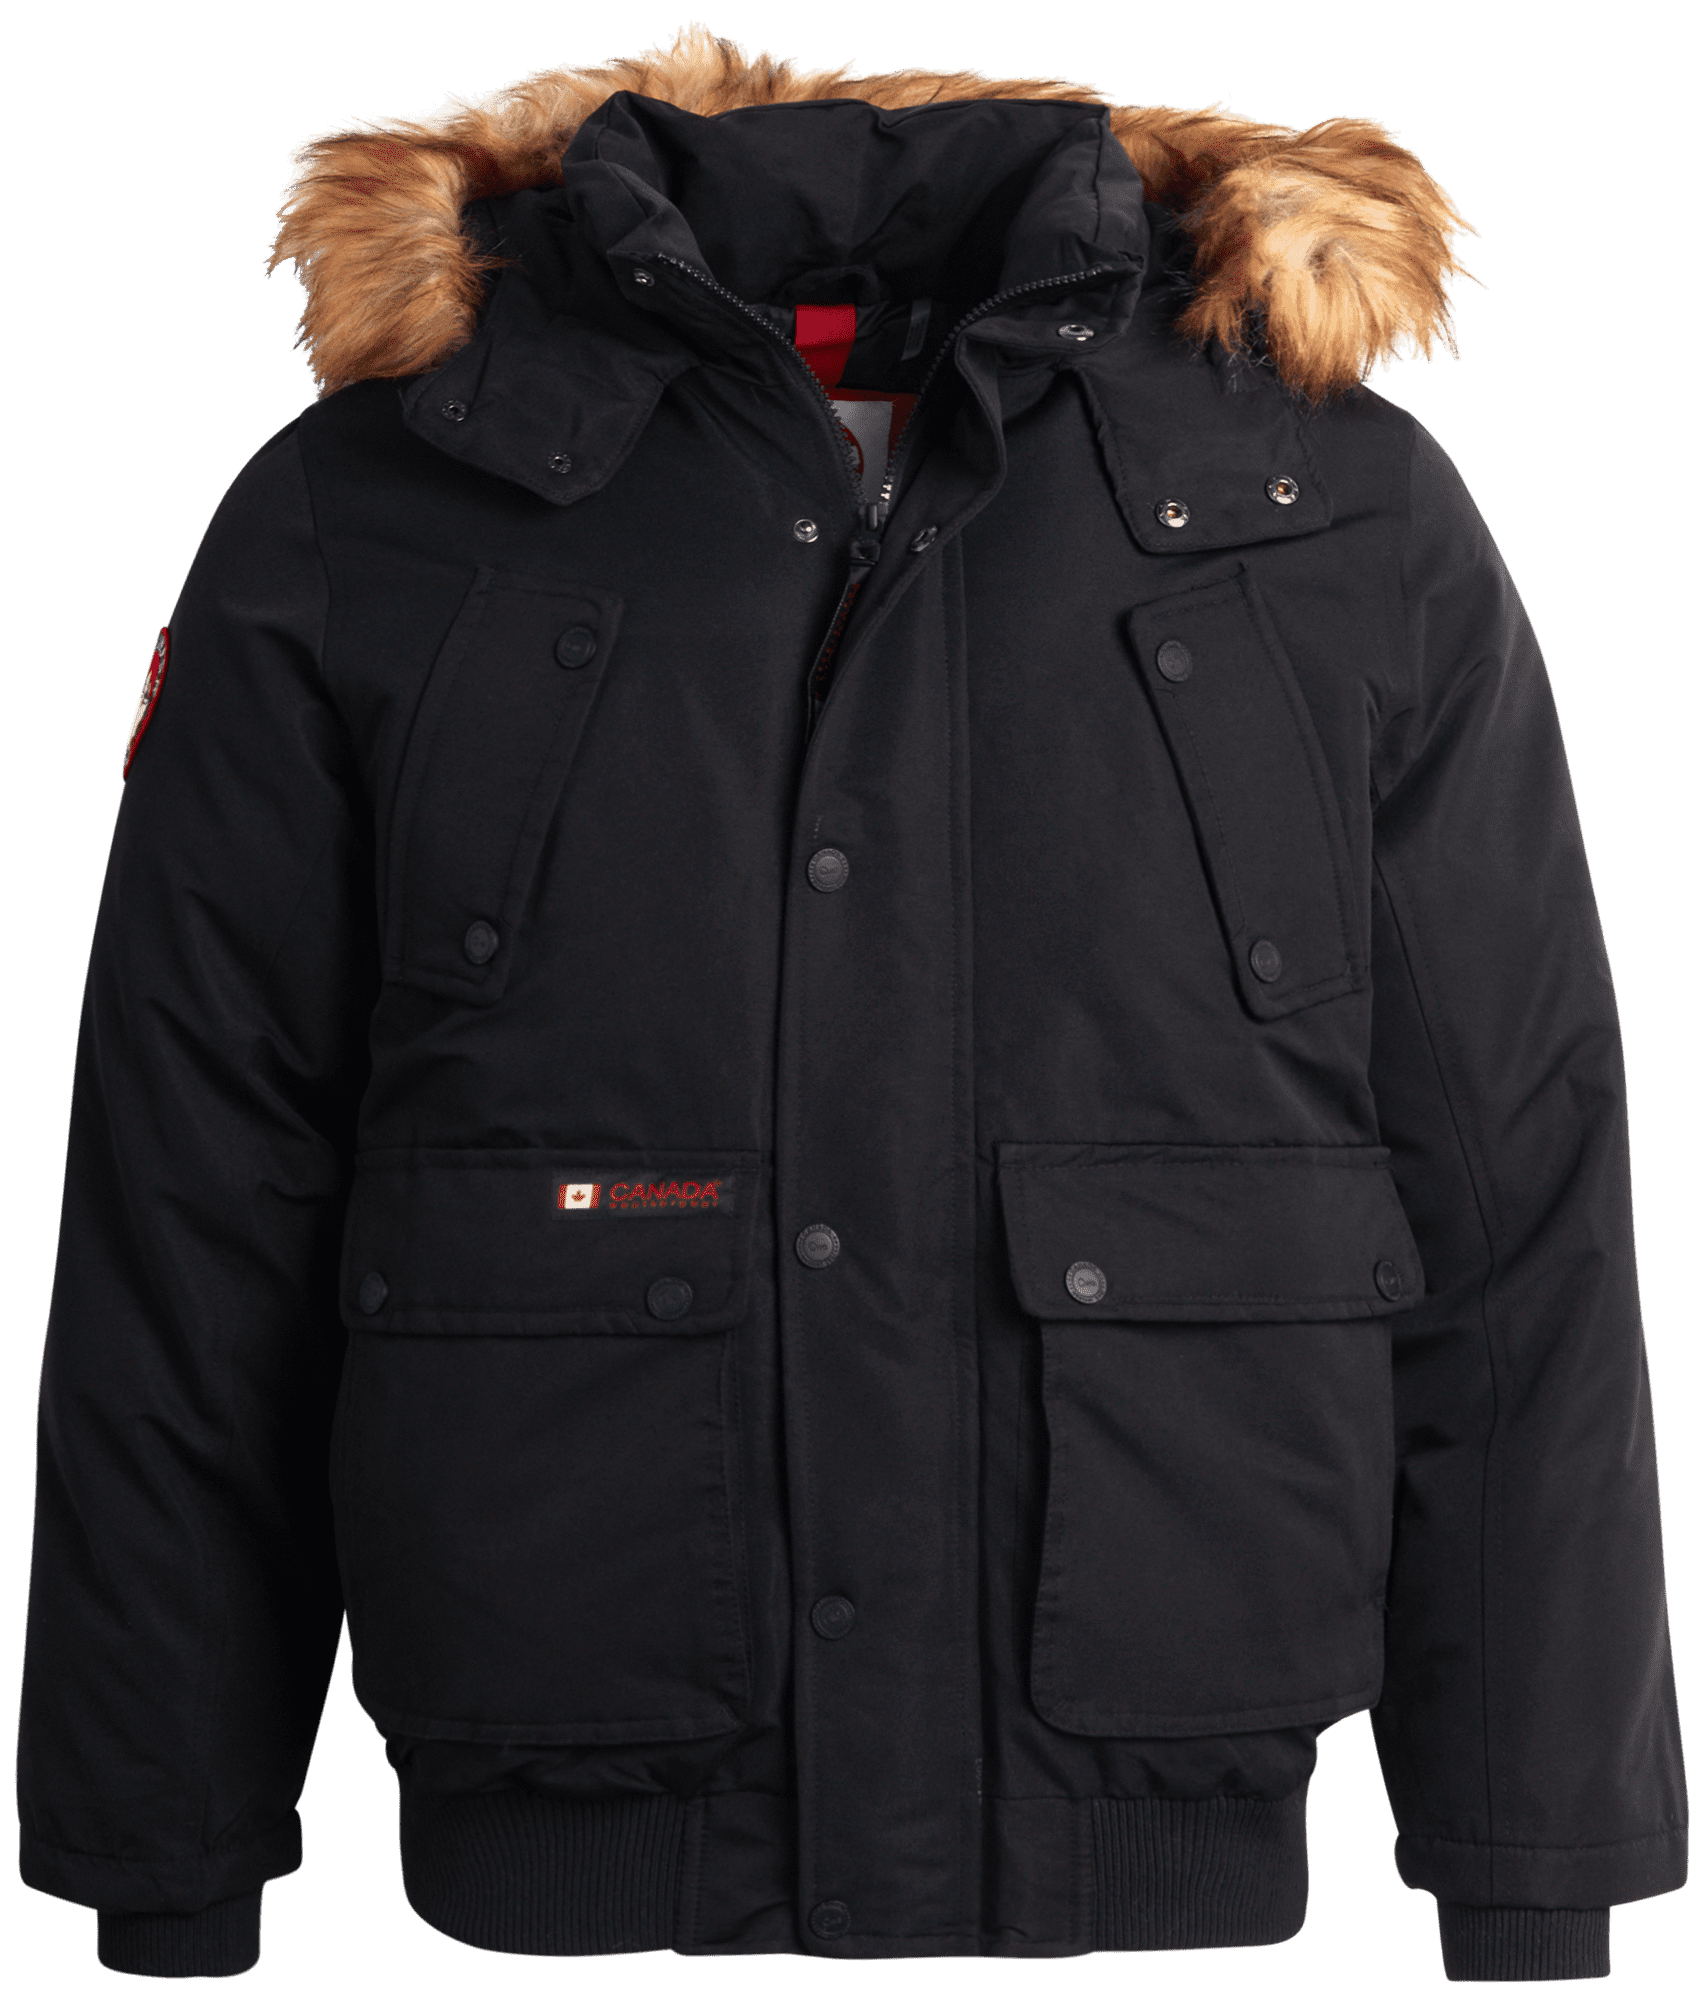 CANADA WEATHER GEAR Mens Winter Coats - Heavyweight Bomber Parka Jacket ...